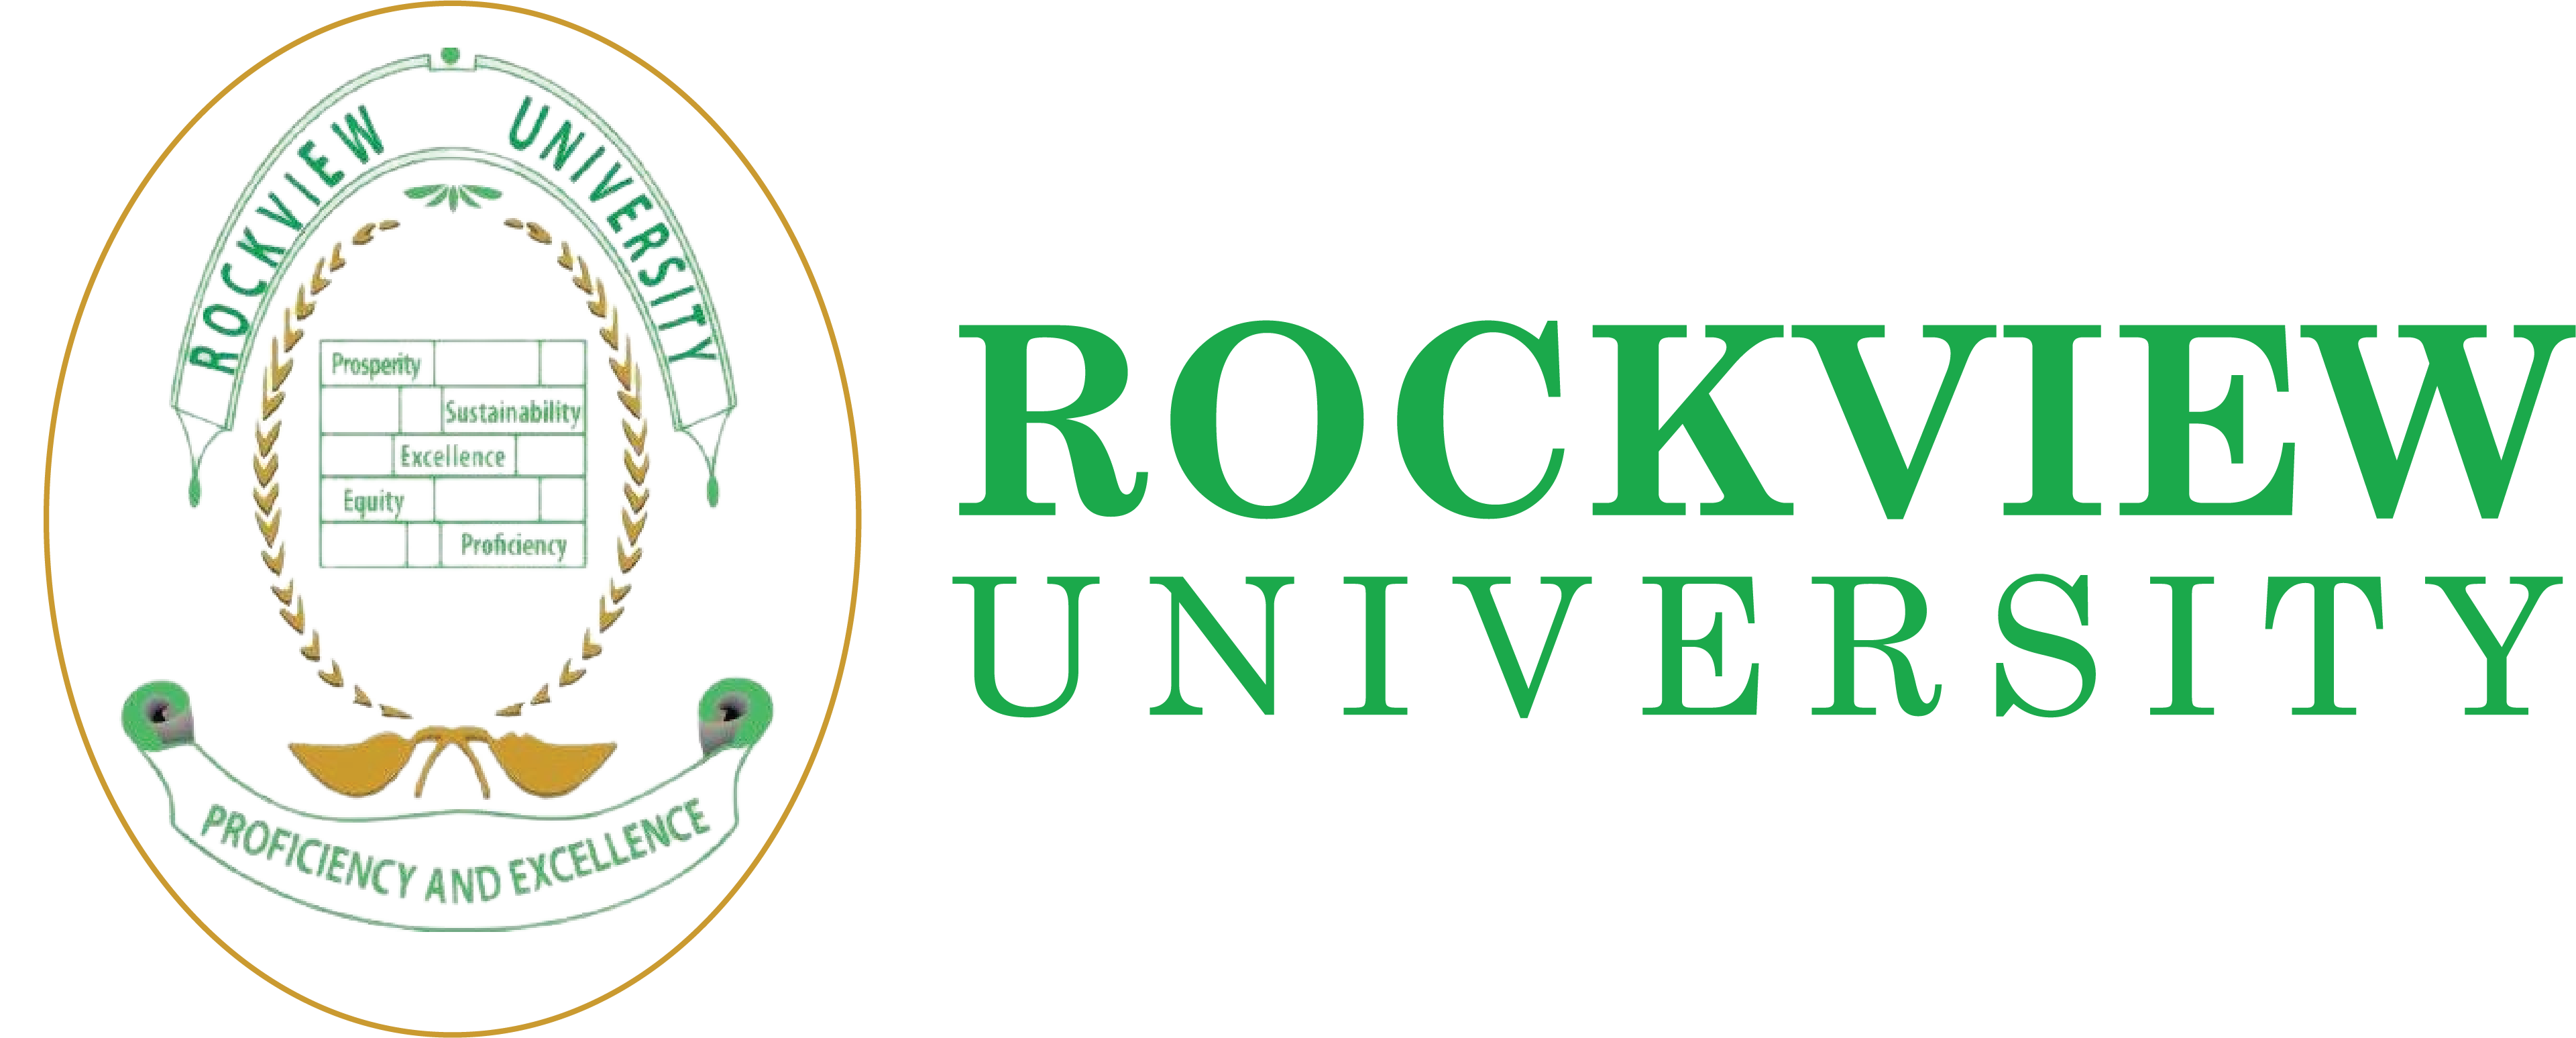 Rockview University logo